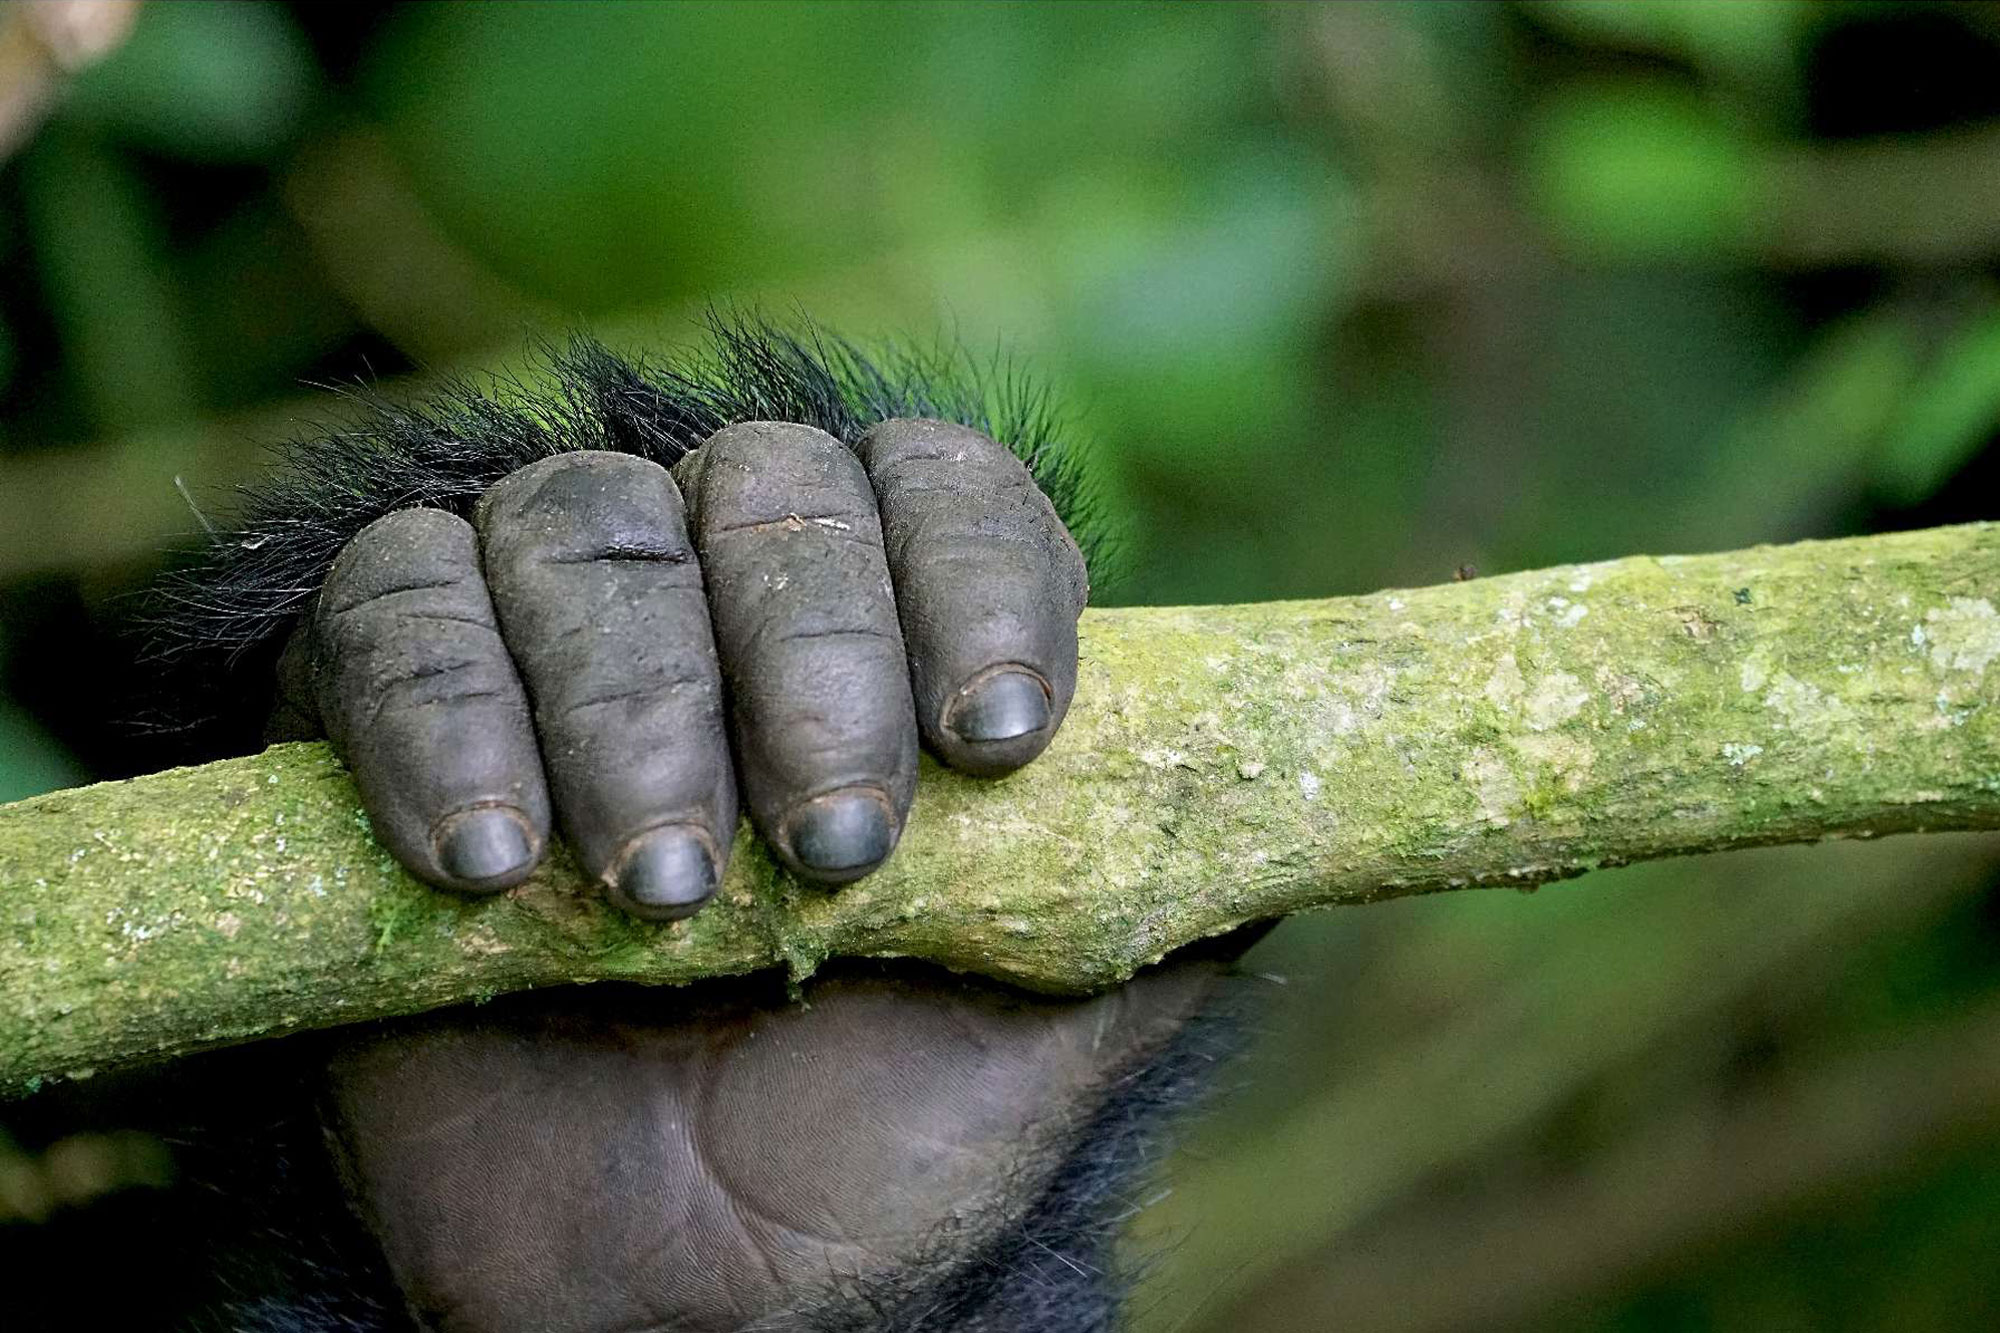 Gorilla hand grasping branch